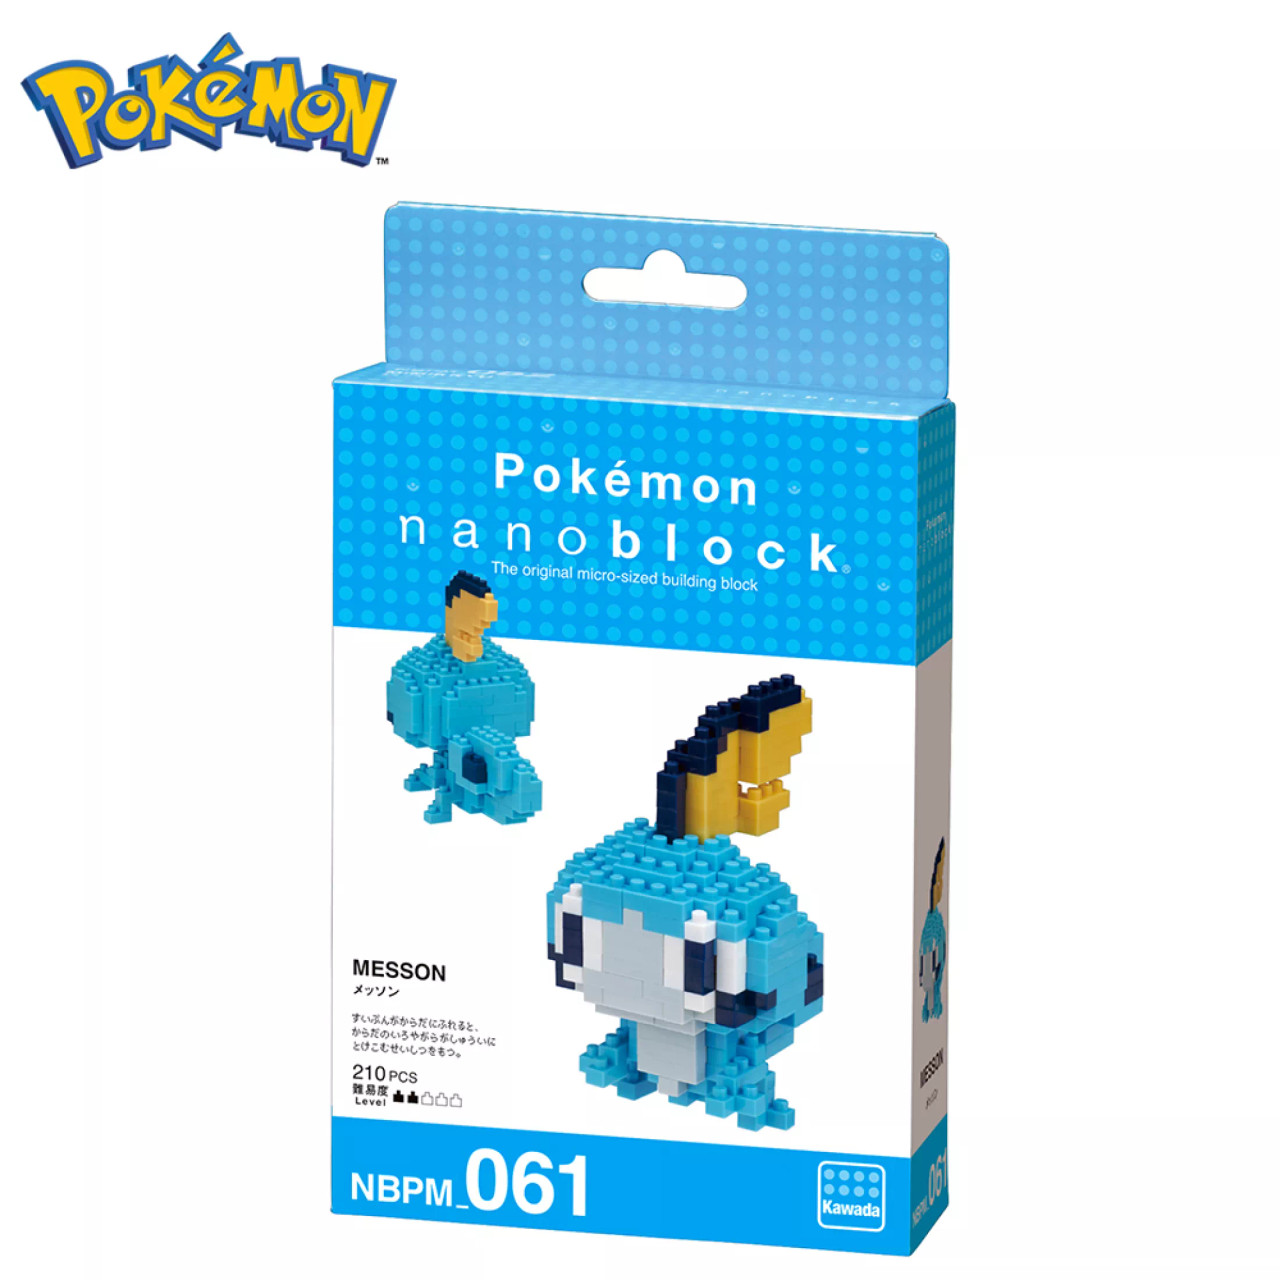 Sobble Pokémon, Nanoblock Pokémon Series